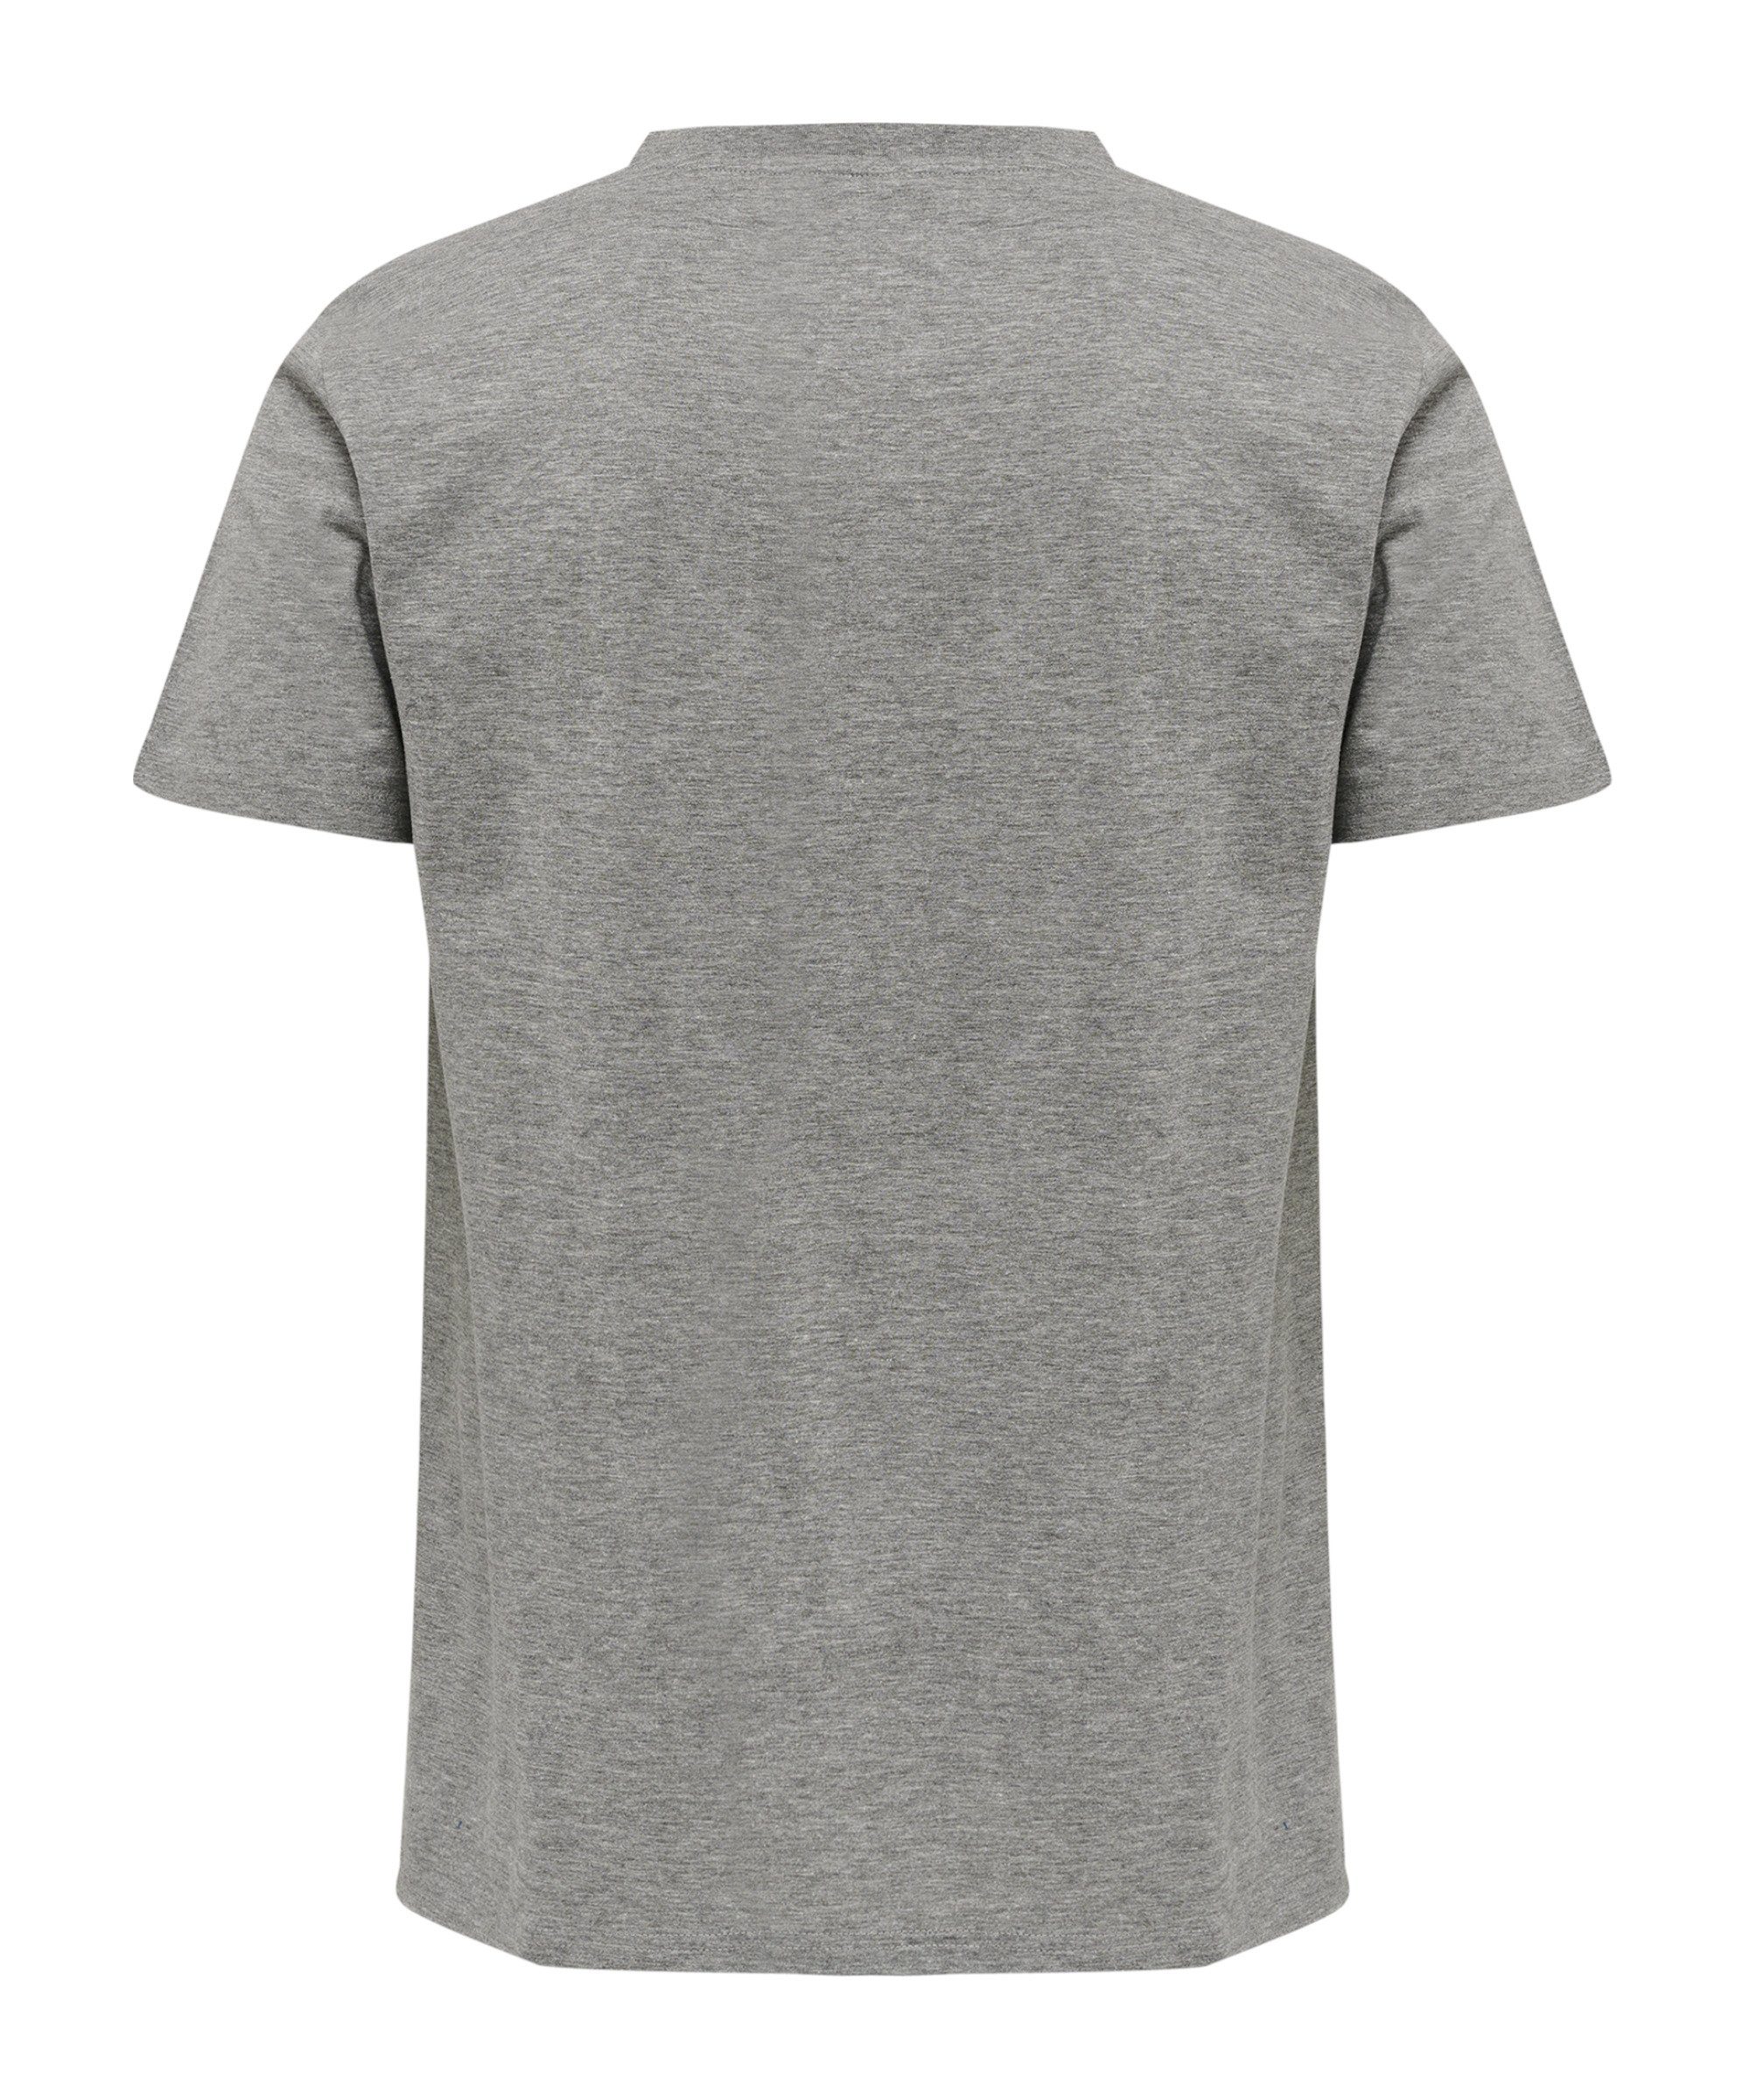 Grid grau Beige T-Shirt T-Shirt Move default hummel